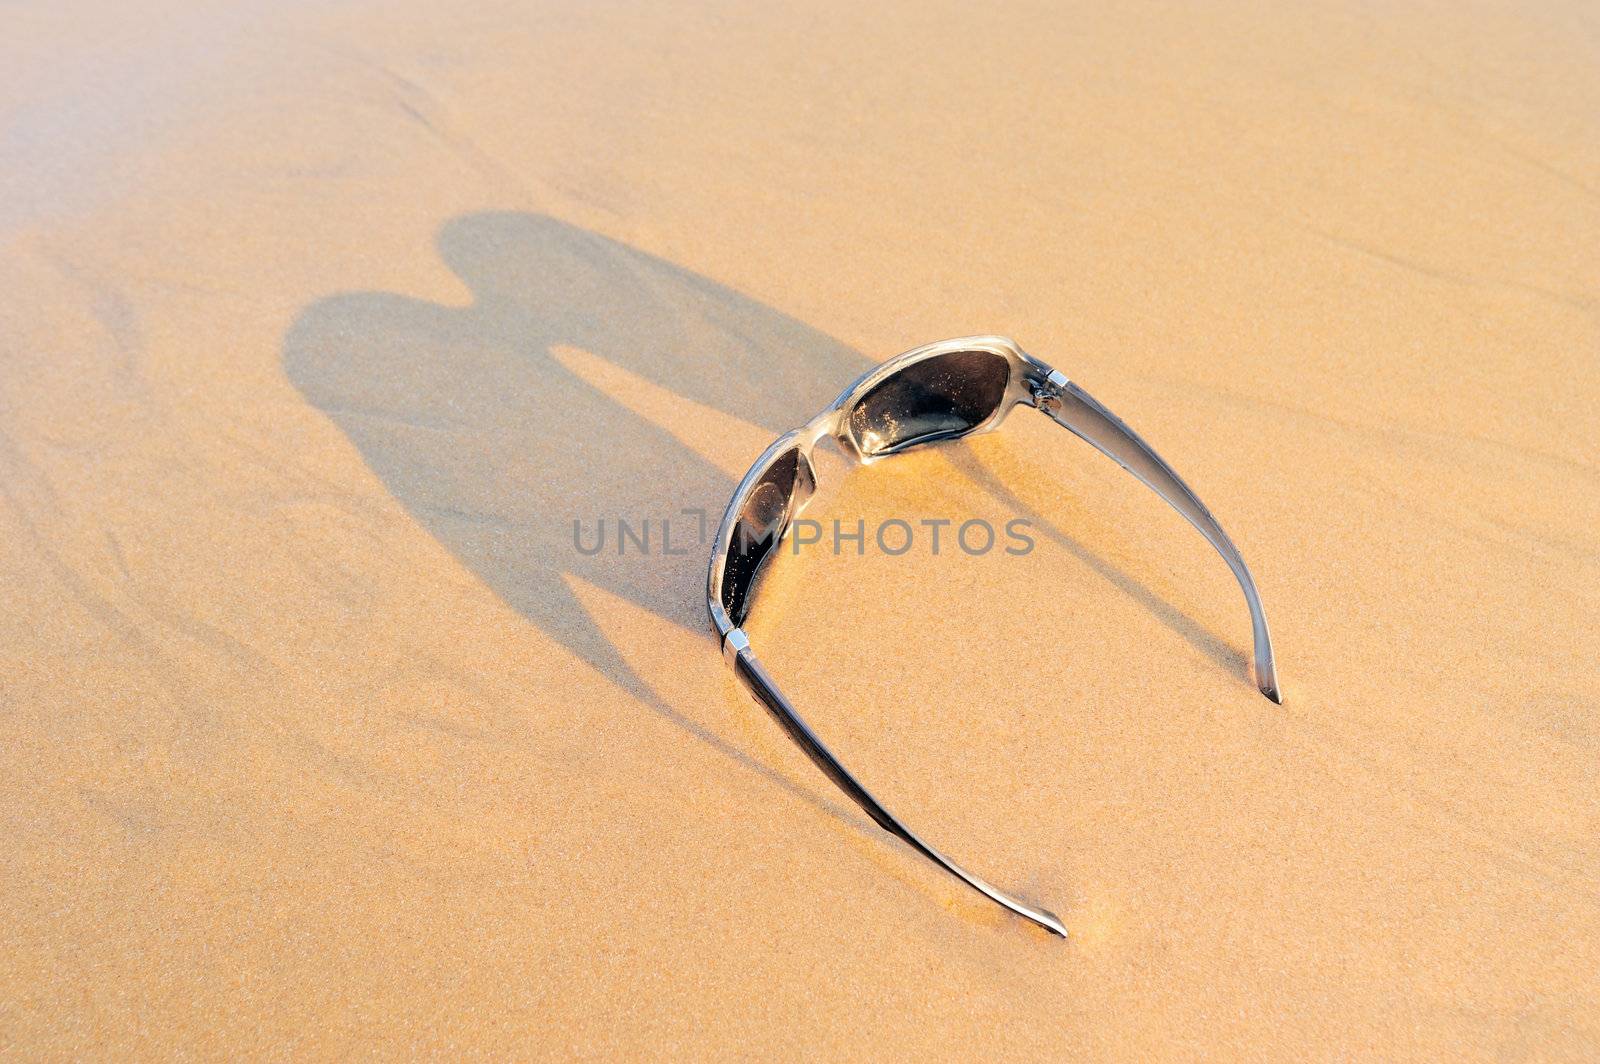 Sunglasses by styf22